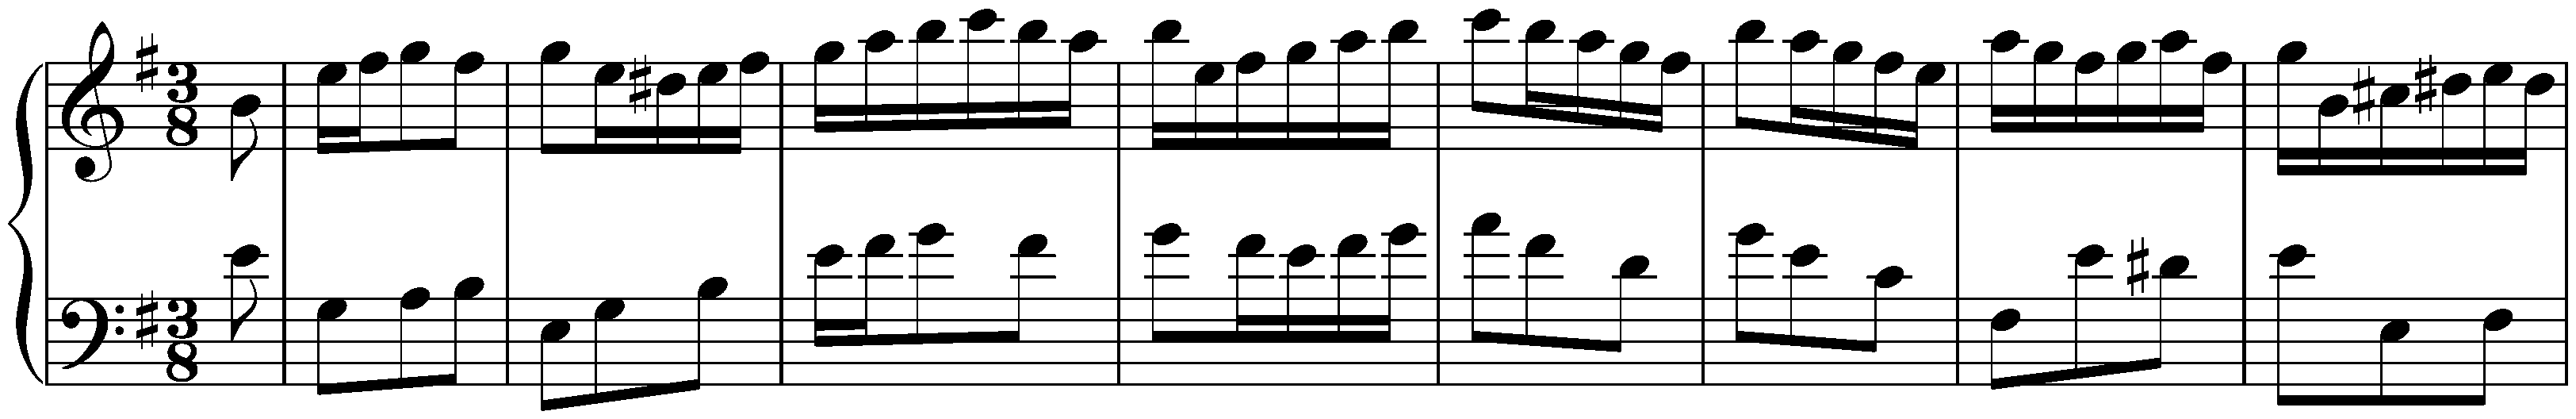 English Suite no. 5 in E minor, BWV 810; 5. Passepied I en Rondeau – Passepied II – Passepied I en Rondeau